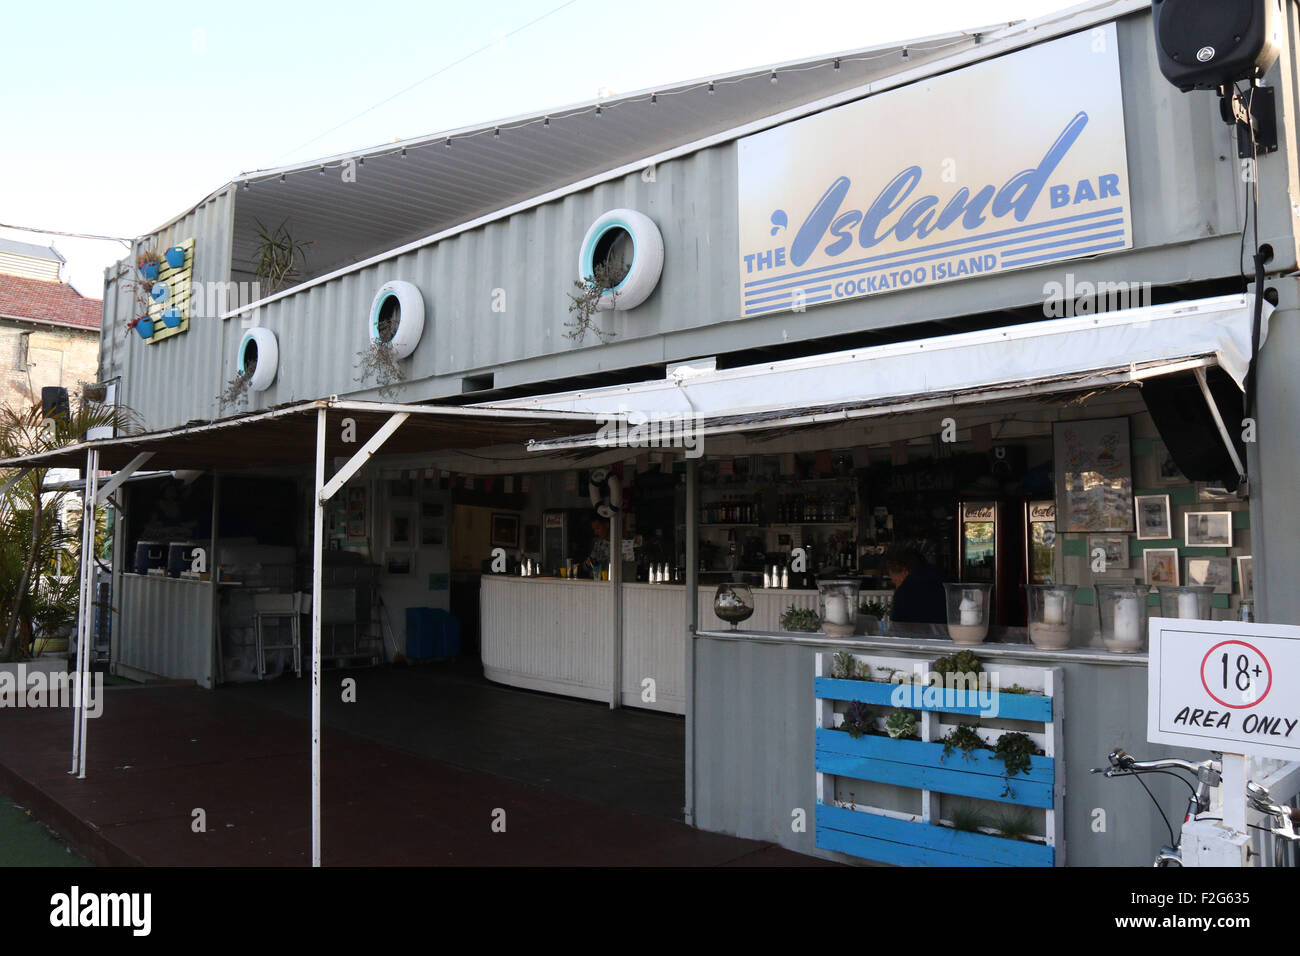 The Island Bar at Cockatoo Island in Sydney, Australia Stock Photo